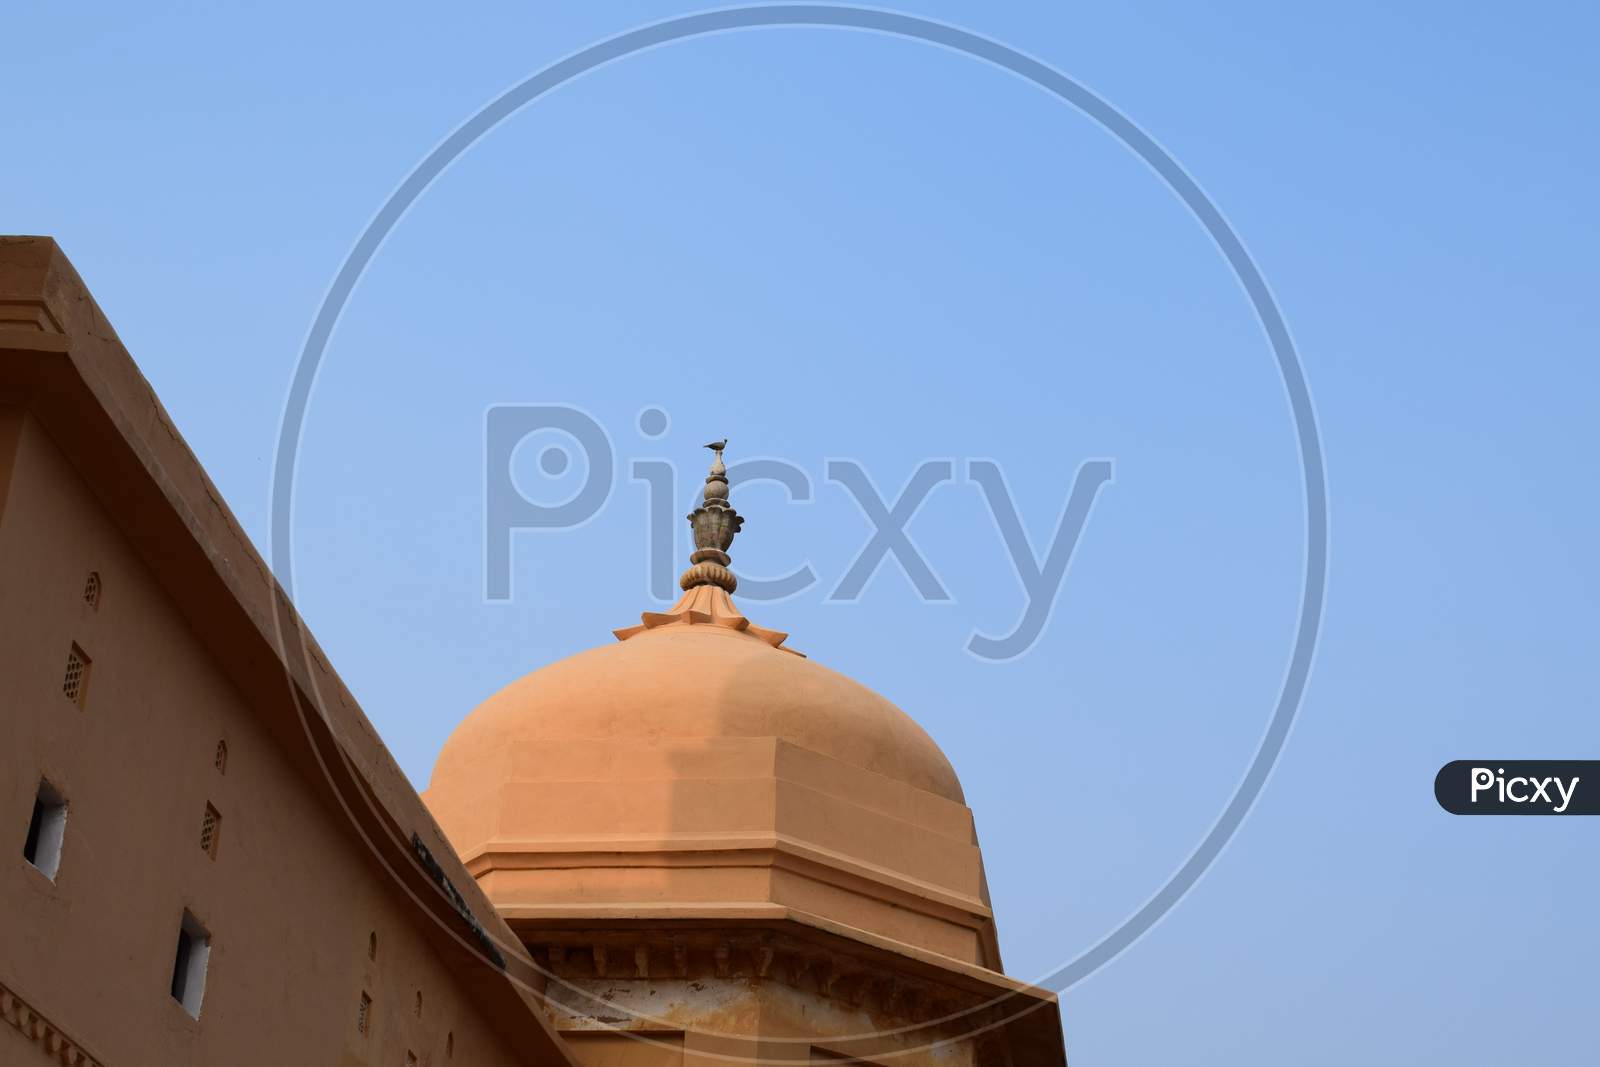 Amer Fort Jaipur Rajasthan, India.